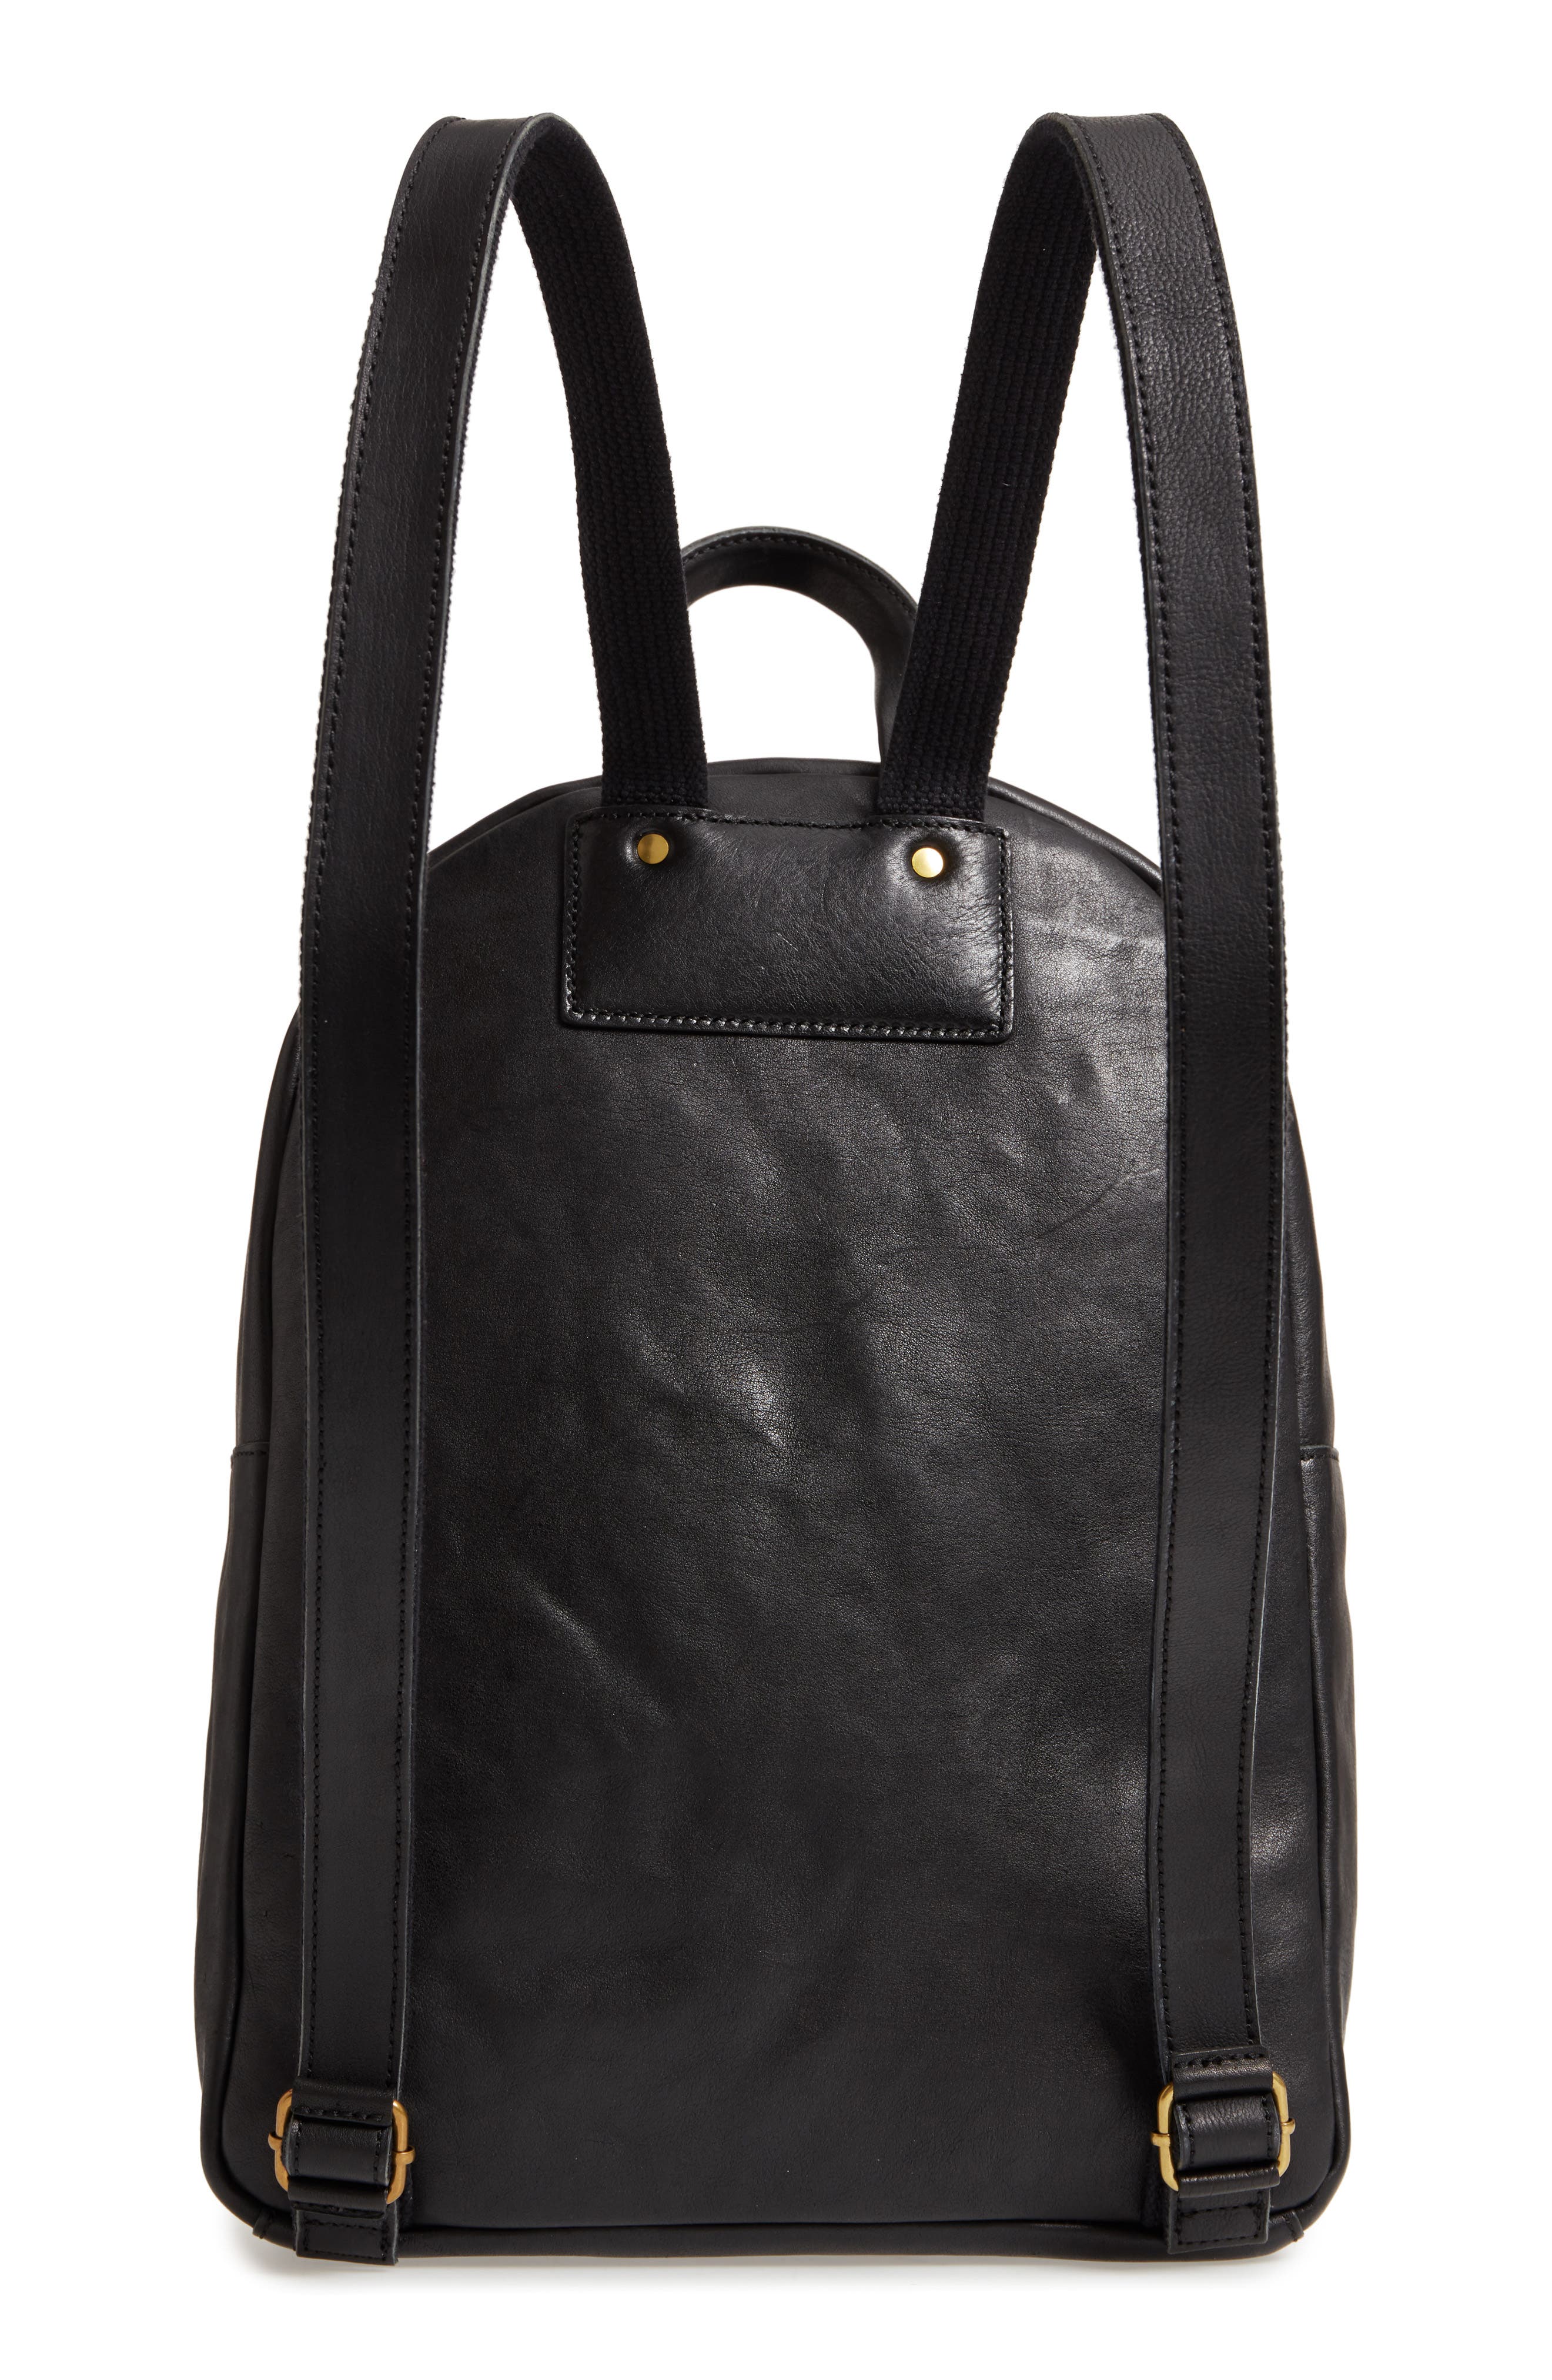 Madewell Lorimer Leather Backpack in True Black